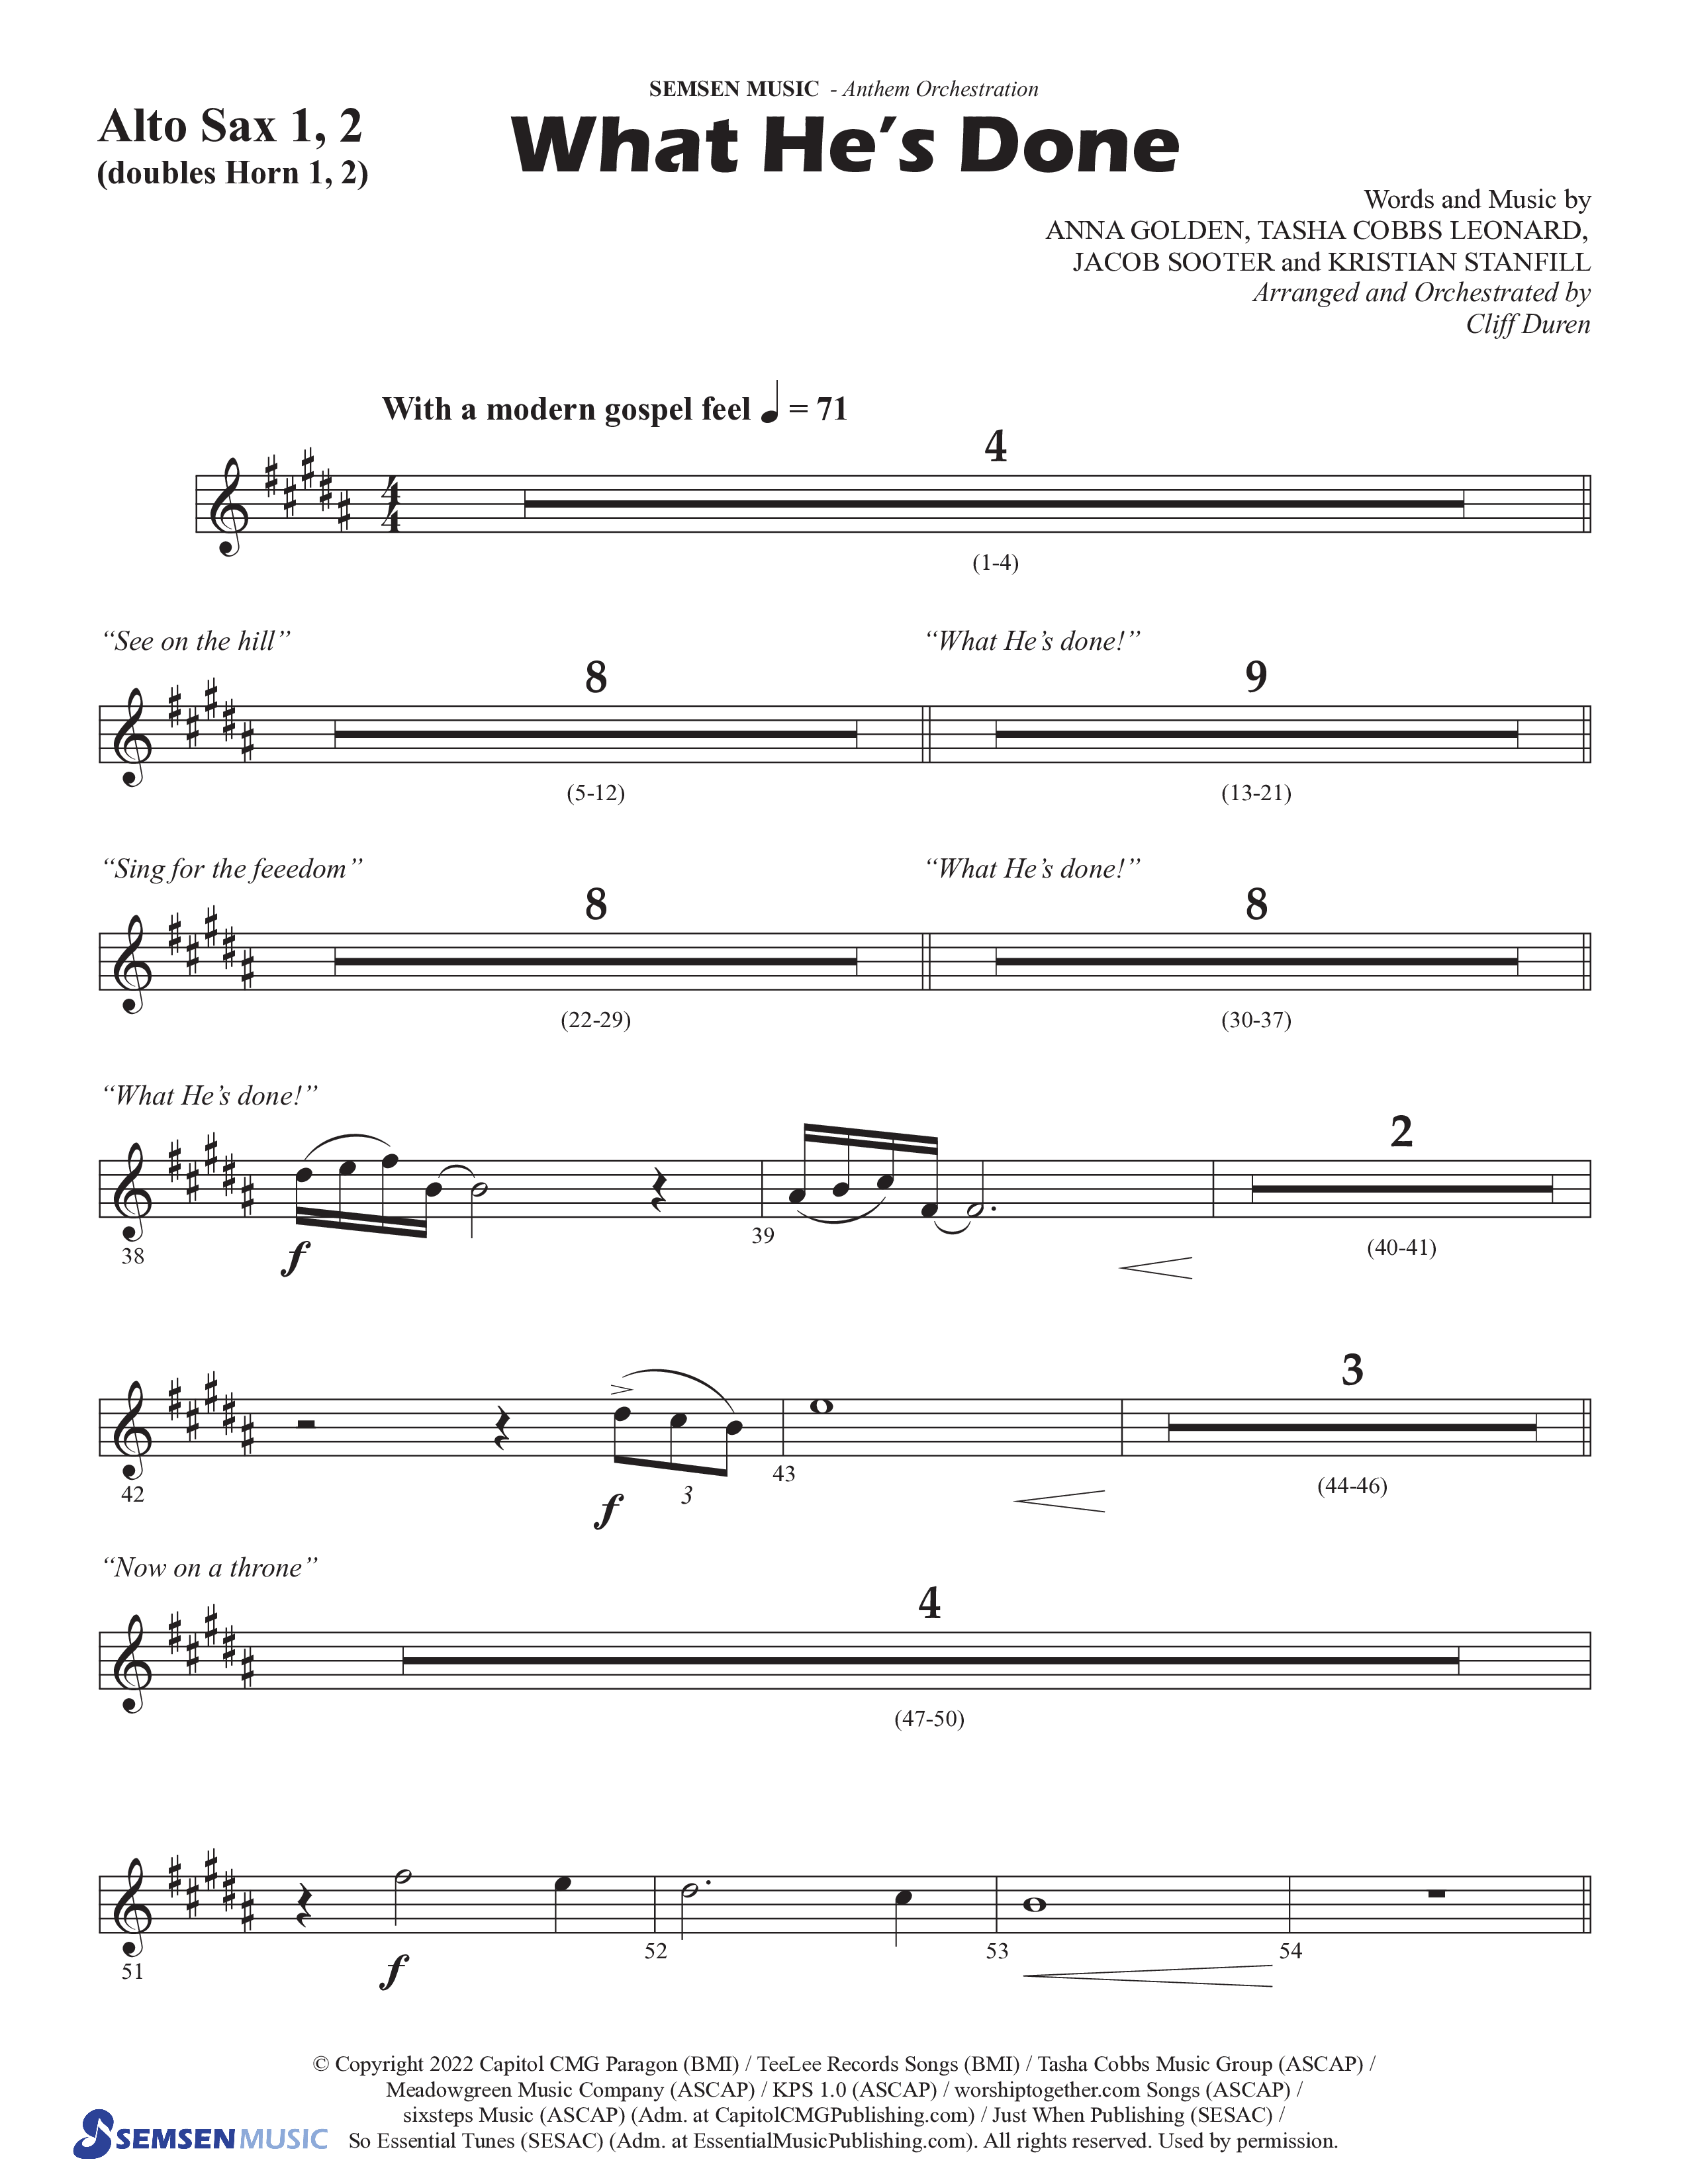 What He's Done (Choral Anthem SATB) Alto Sax 1/2 (Semsen Music / Arr. Cliff Duren)